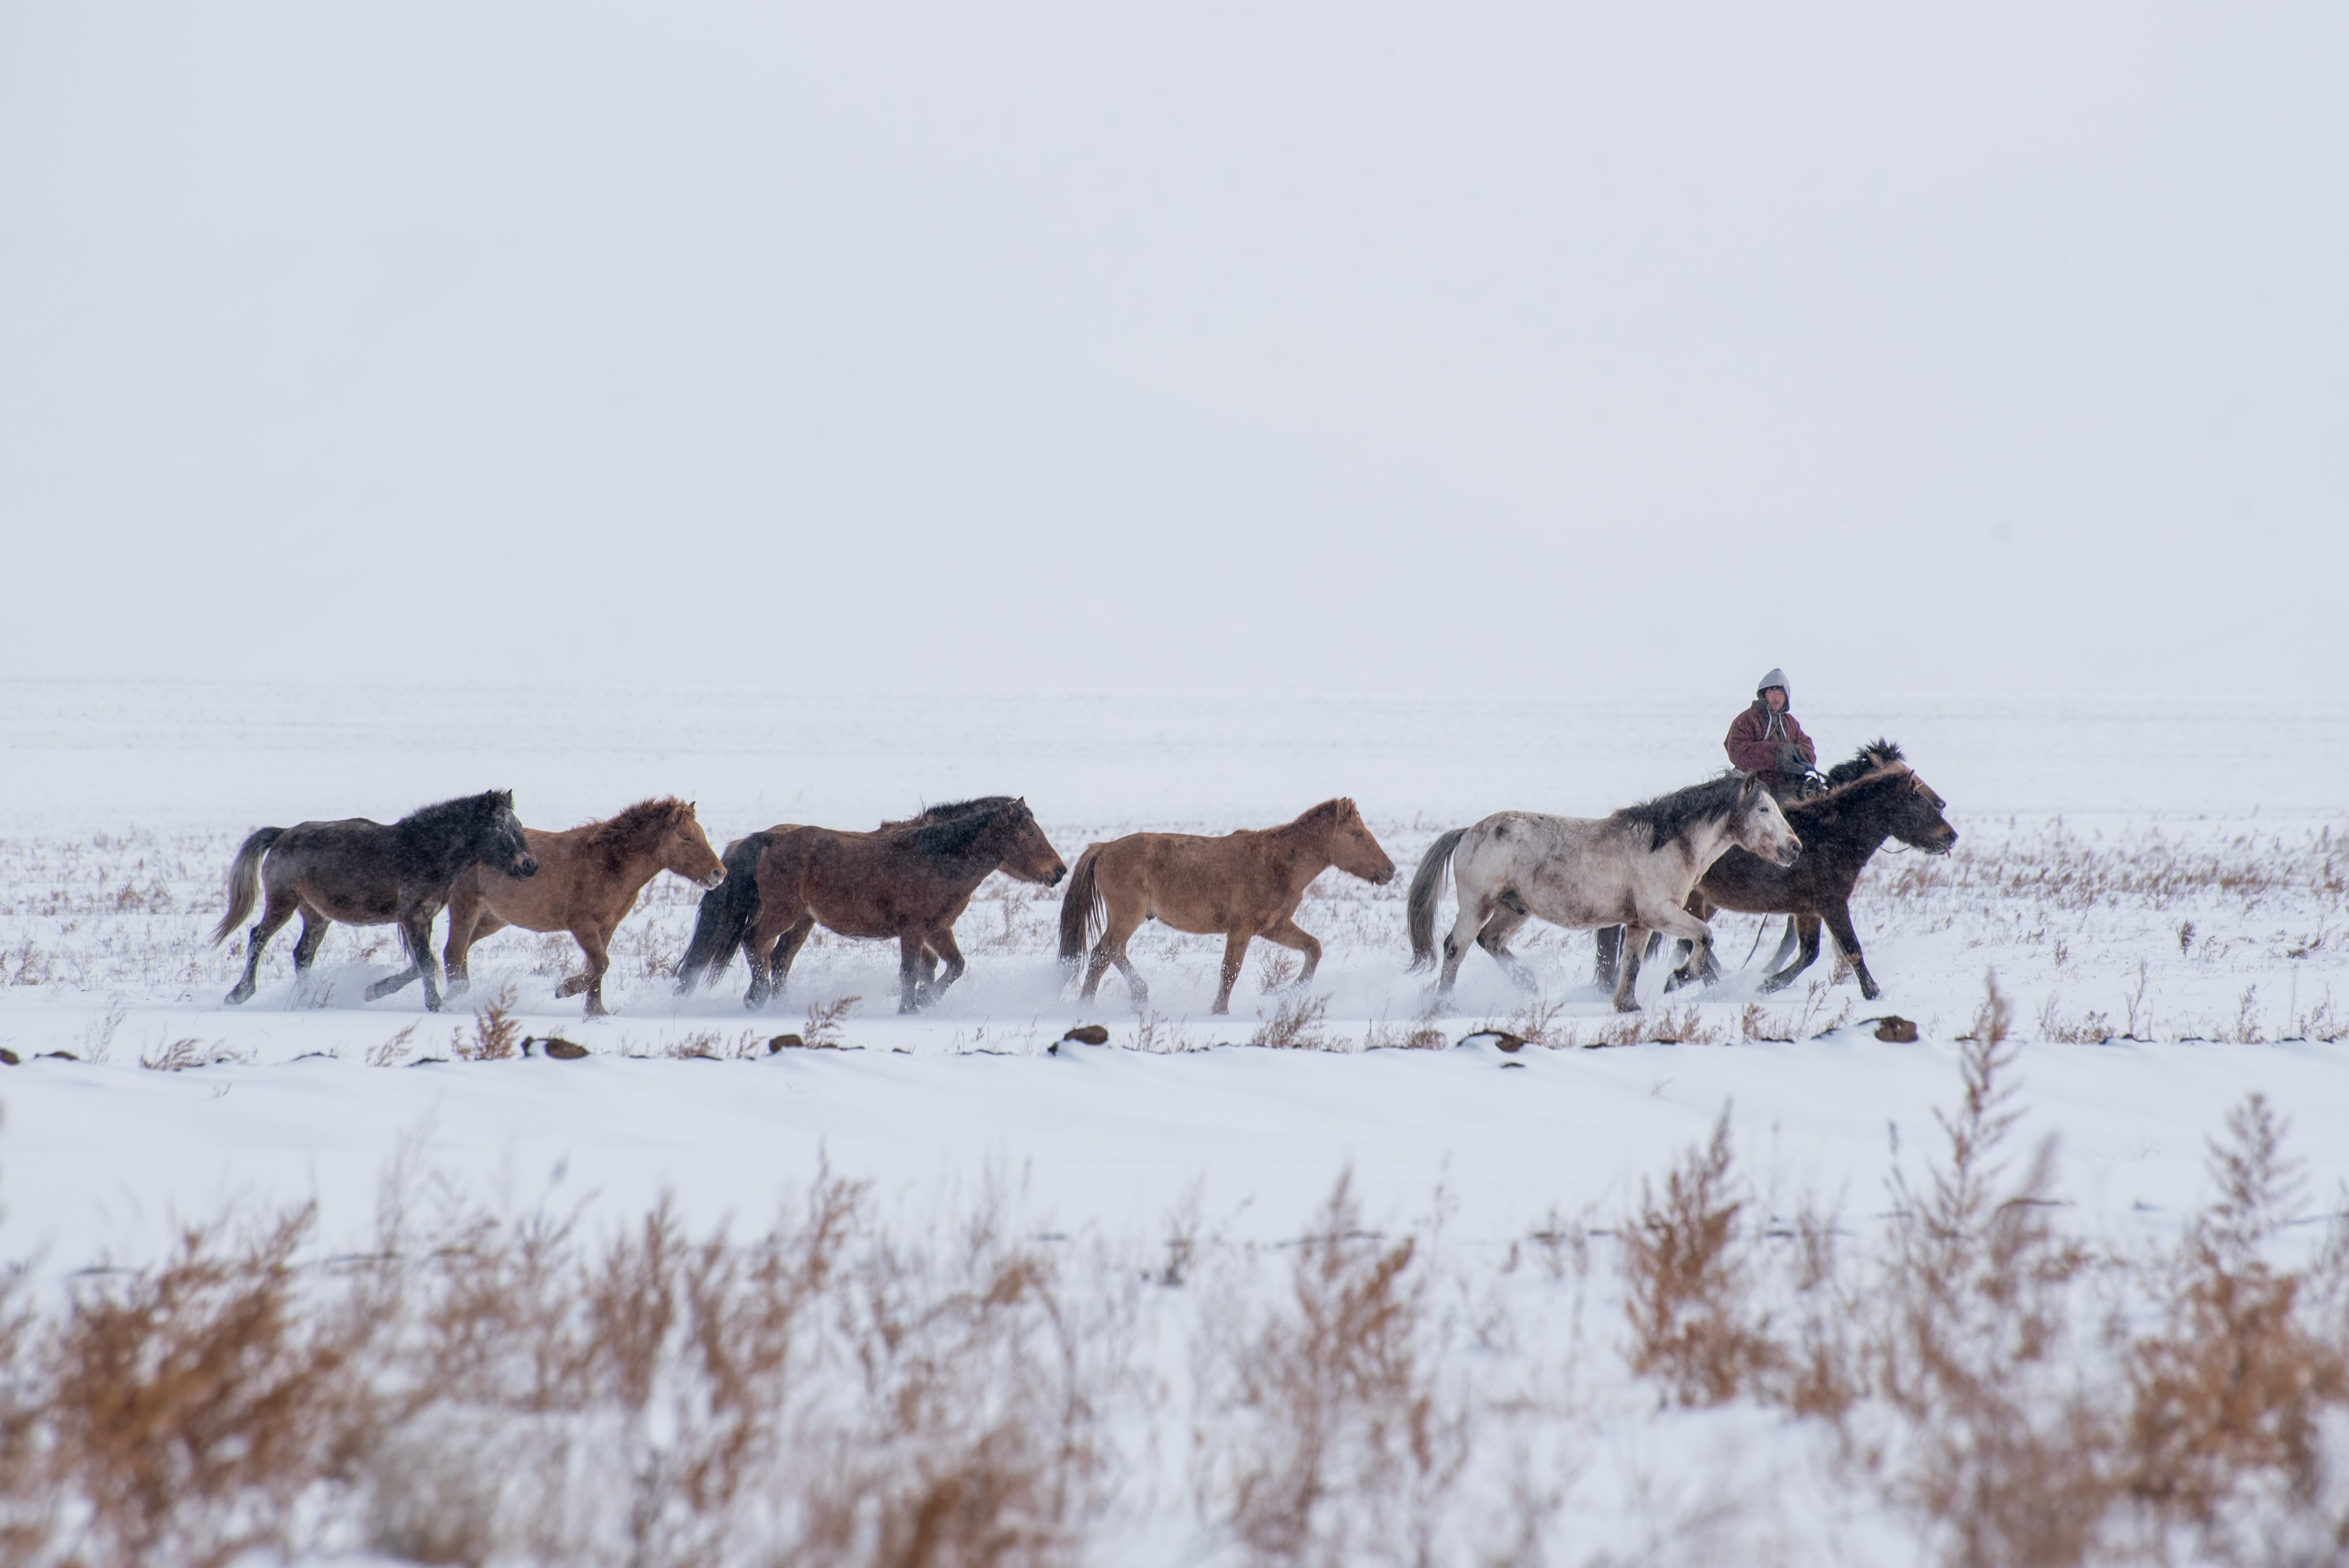 shepherd-sitting-horse-shepherding-herd-sheep-prairie-with-snow-capped-mountains-background-min.jpg